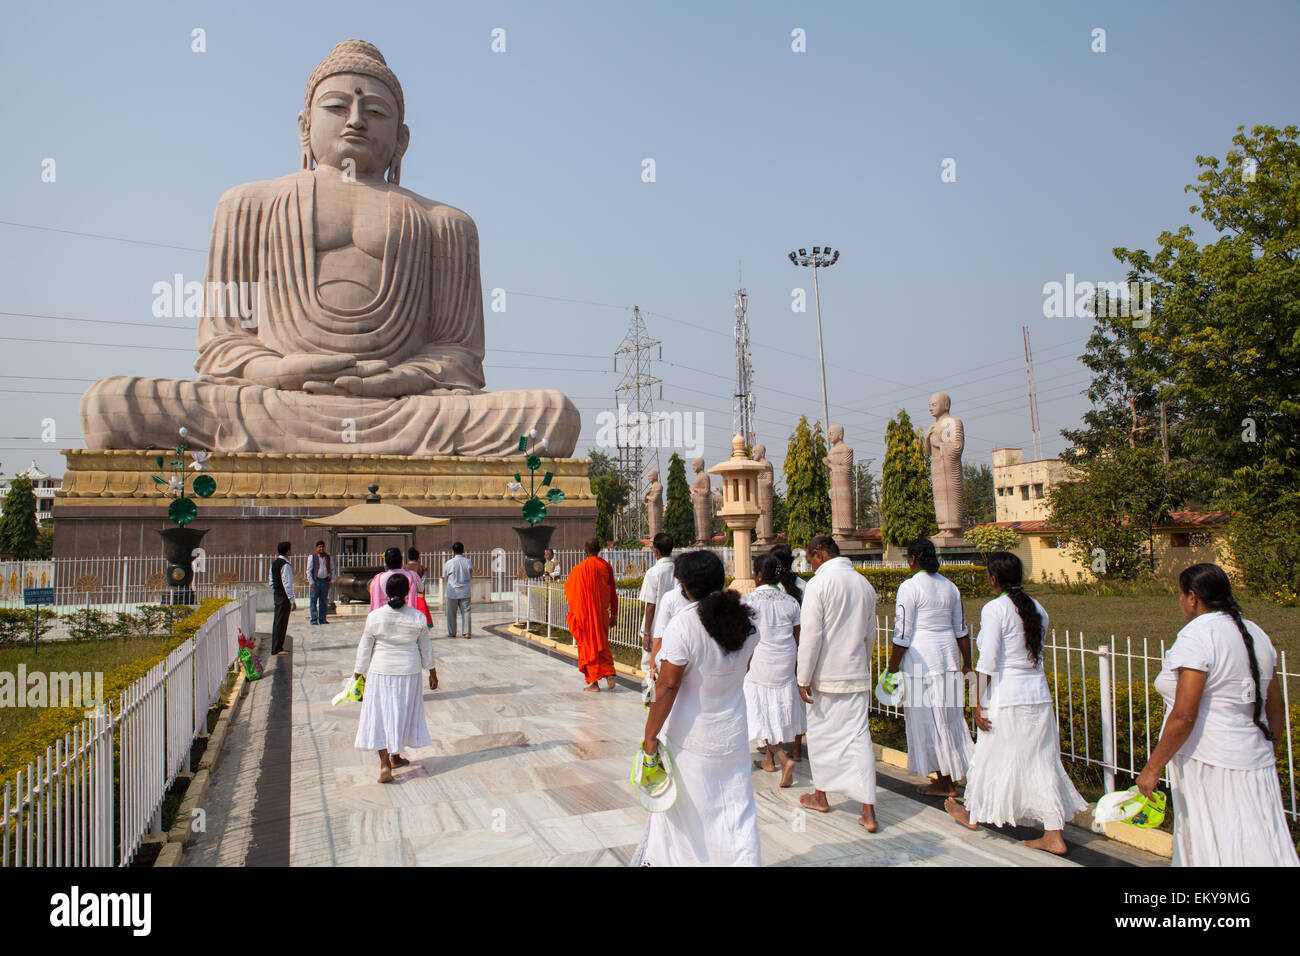 Pilgrims walk towards the Great Buddha statue at Bodhgaya Stock Photo